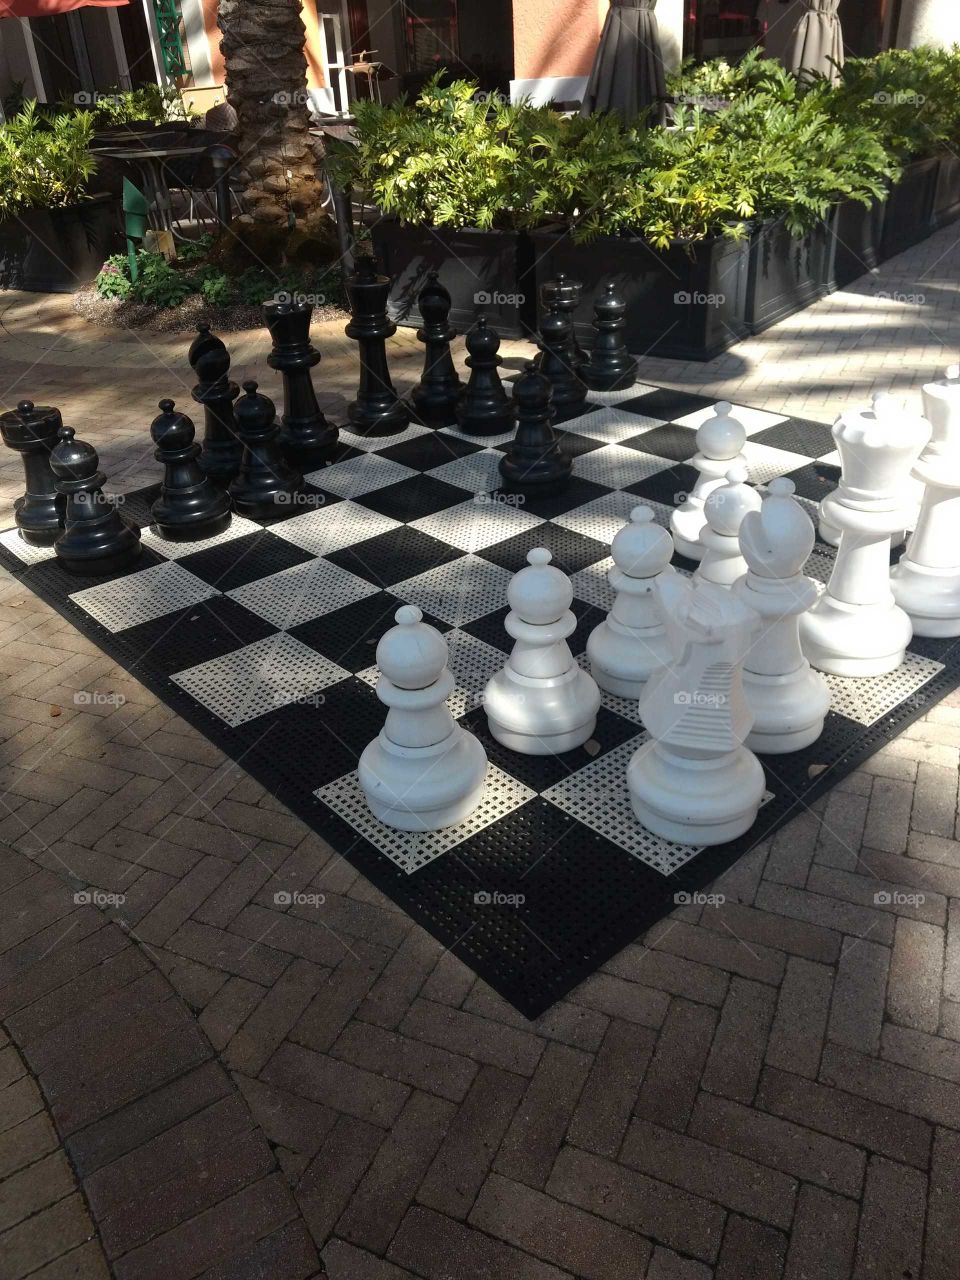 Chess Anyone